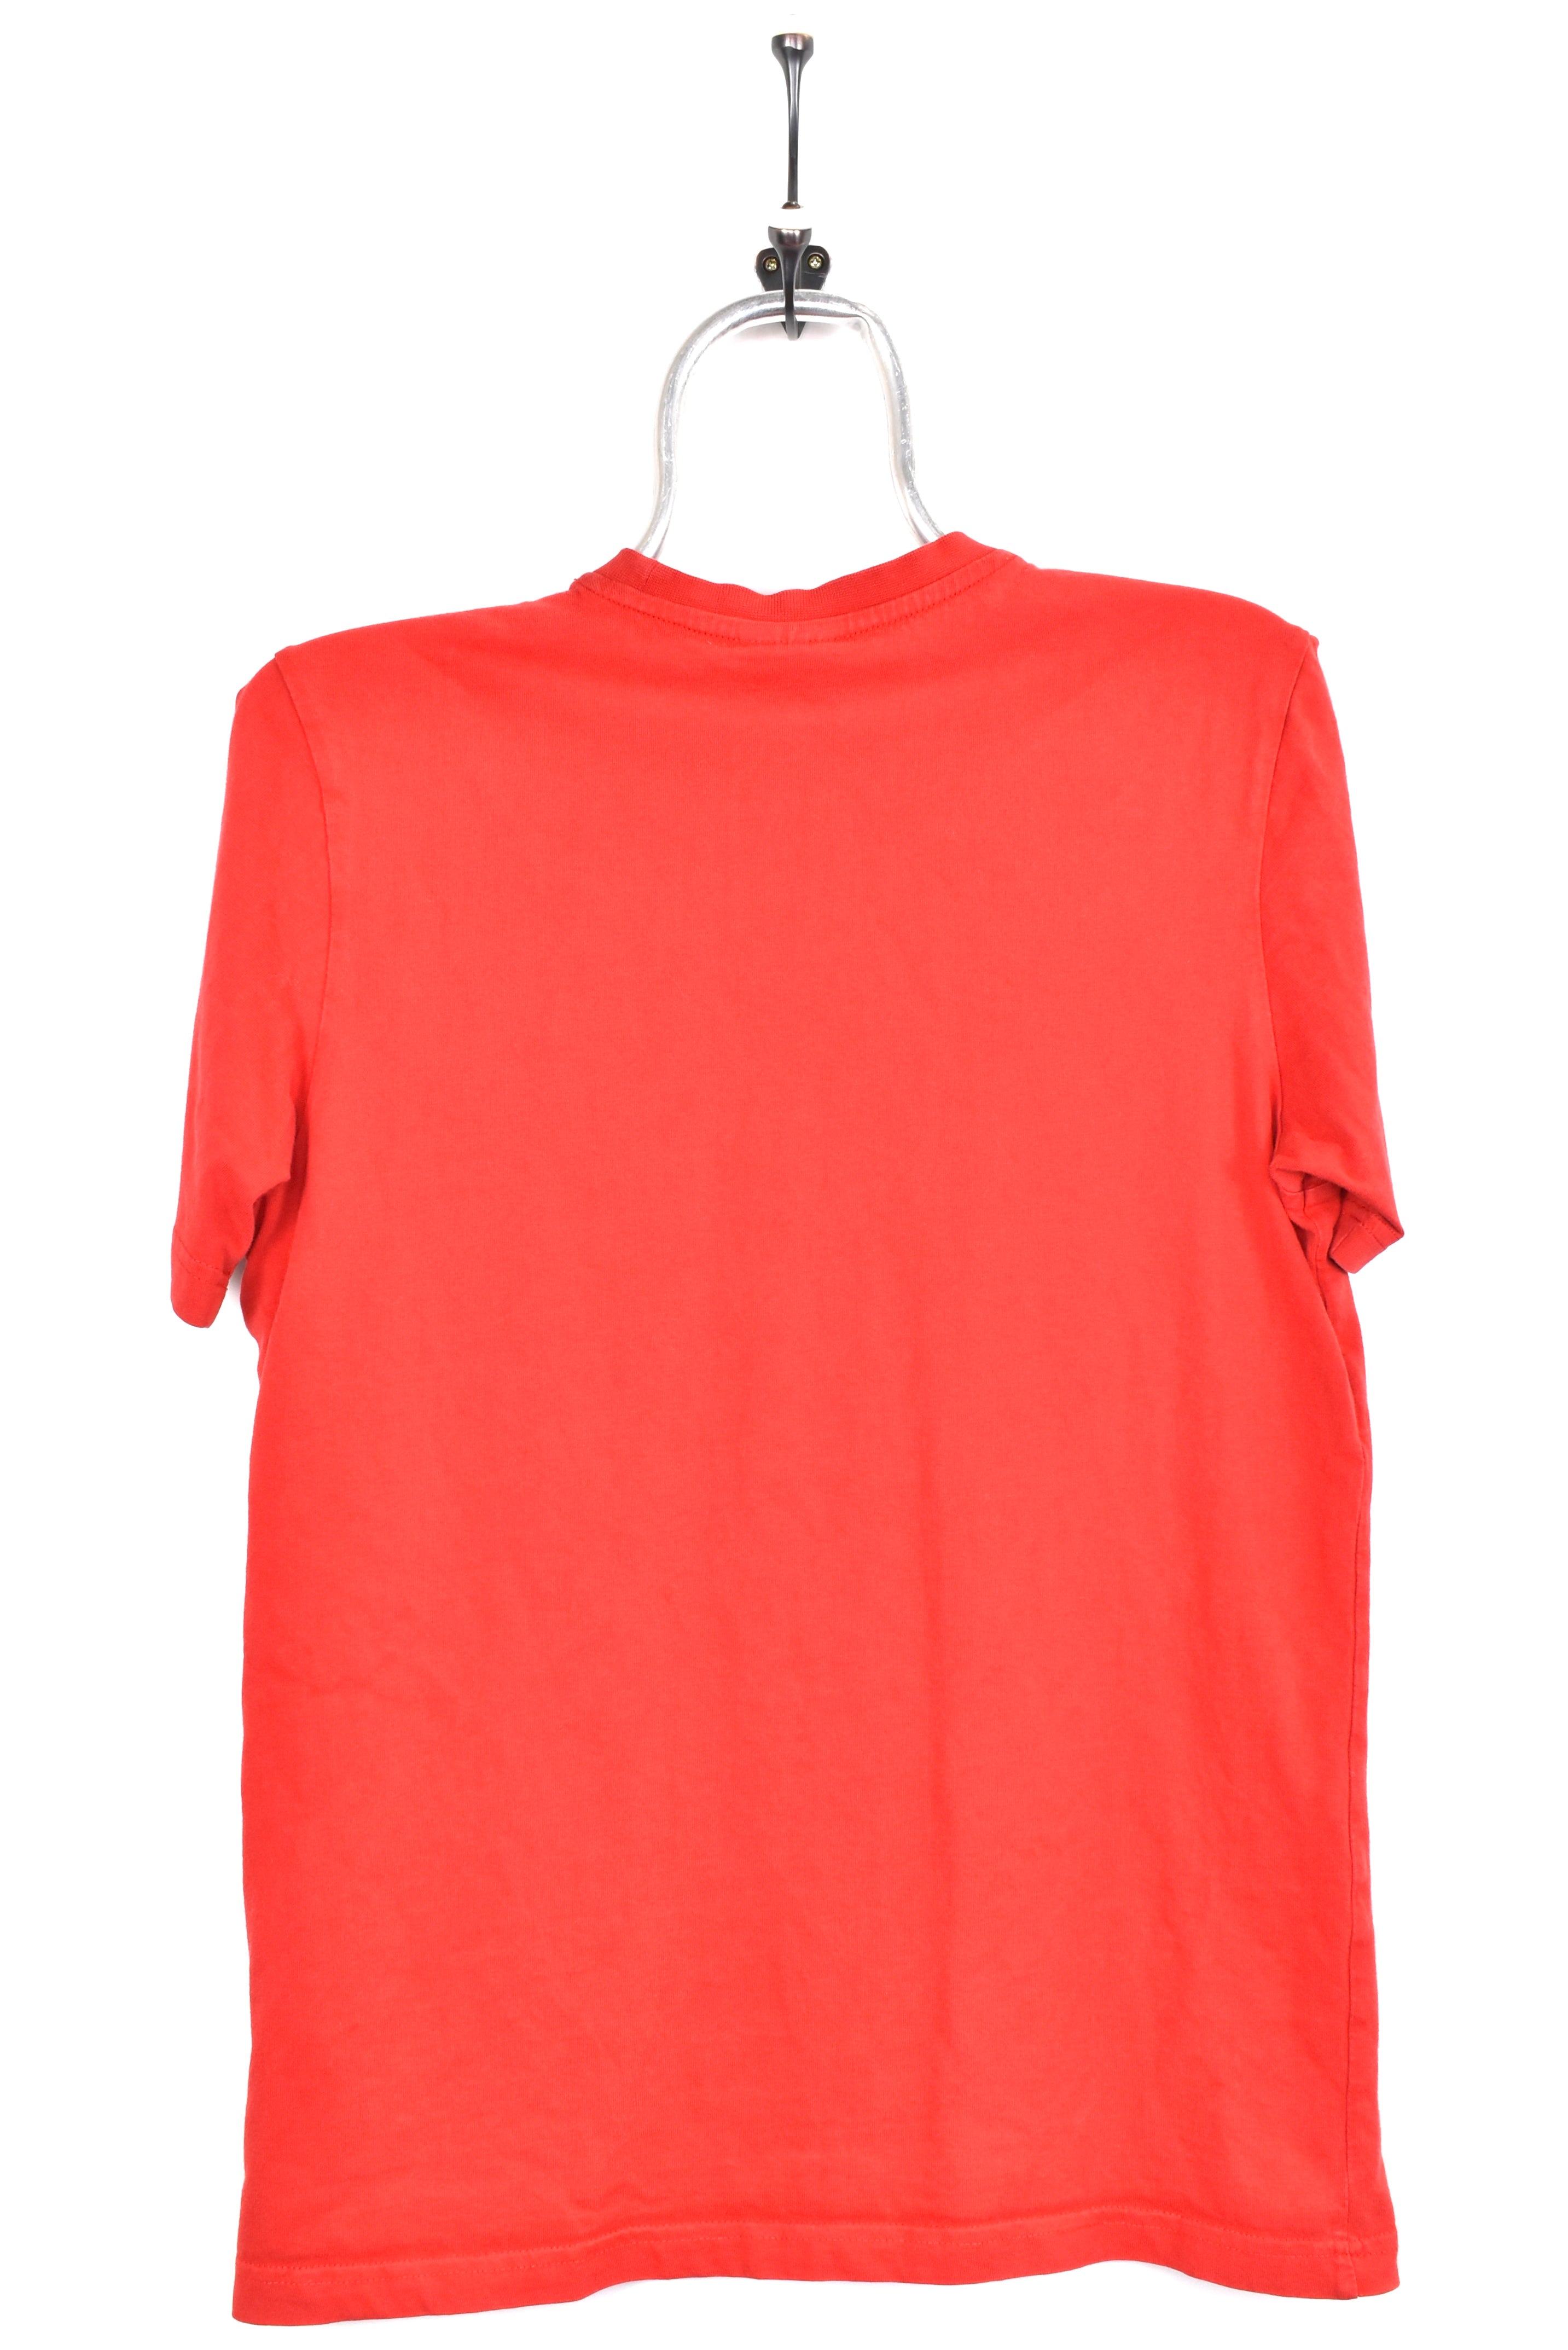 Modern Adidas shirt, red graphic tee - AU S ADIDAS